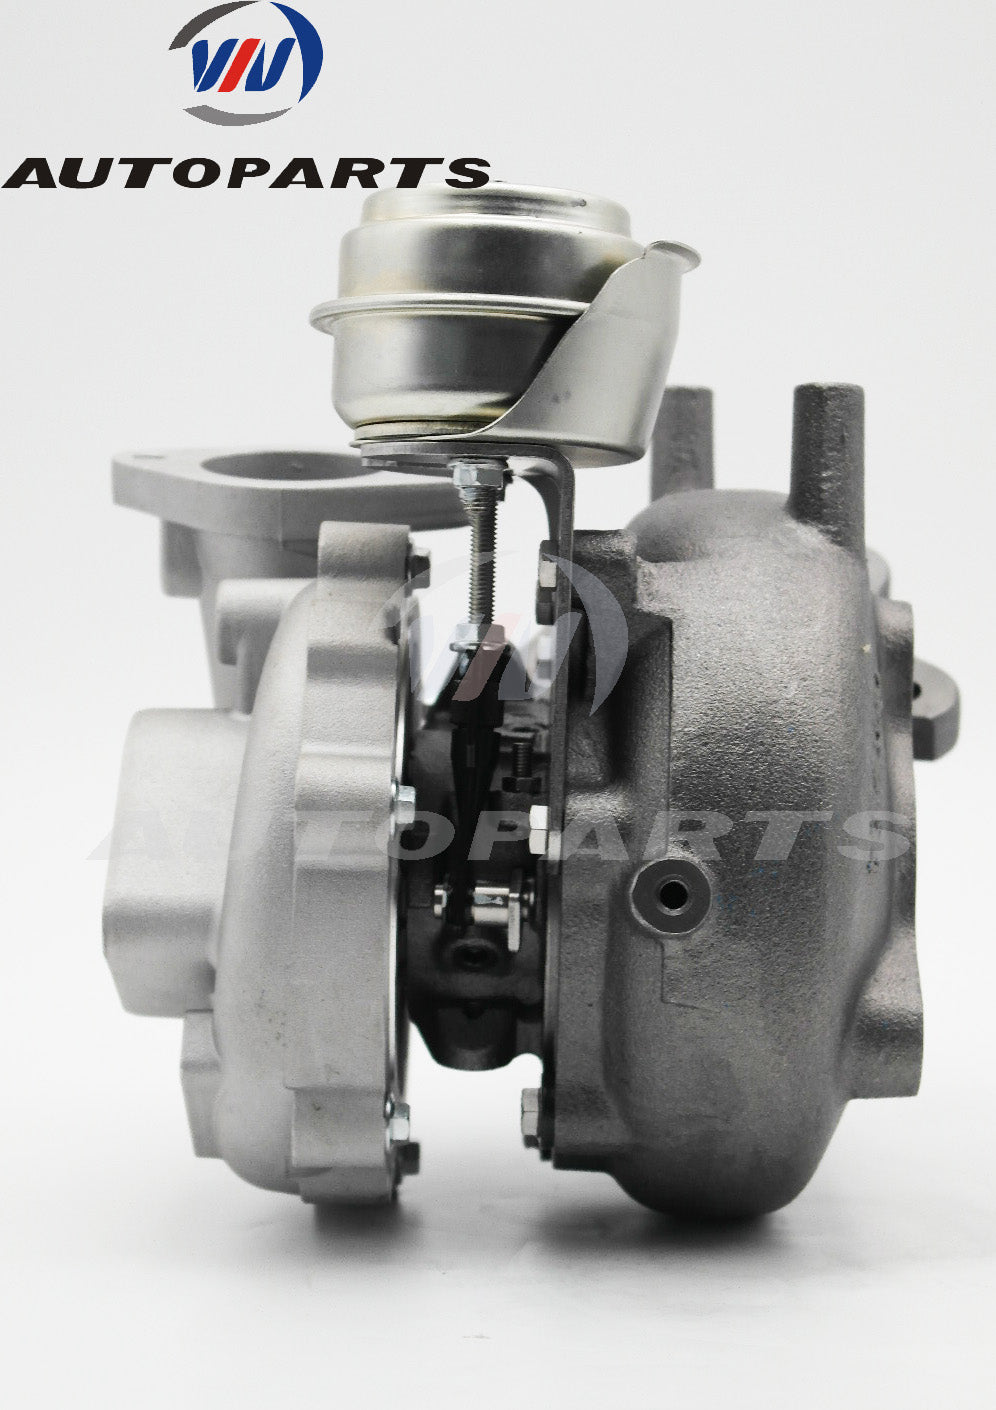 Turbocharger 769708-5004S for Navara 2.5L Diesel YD25 Engine